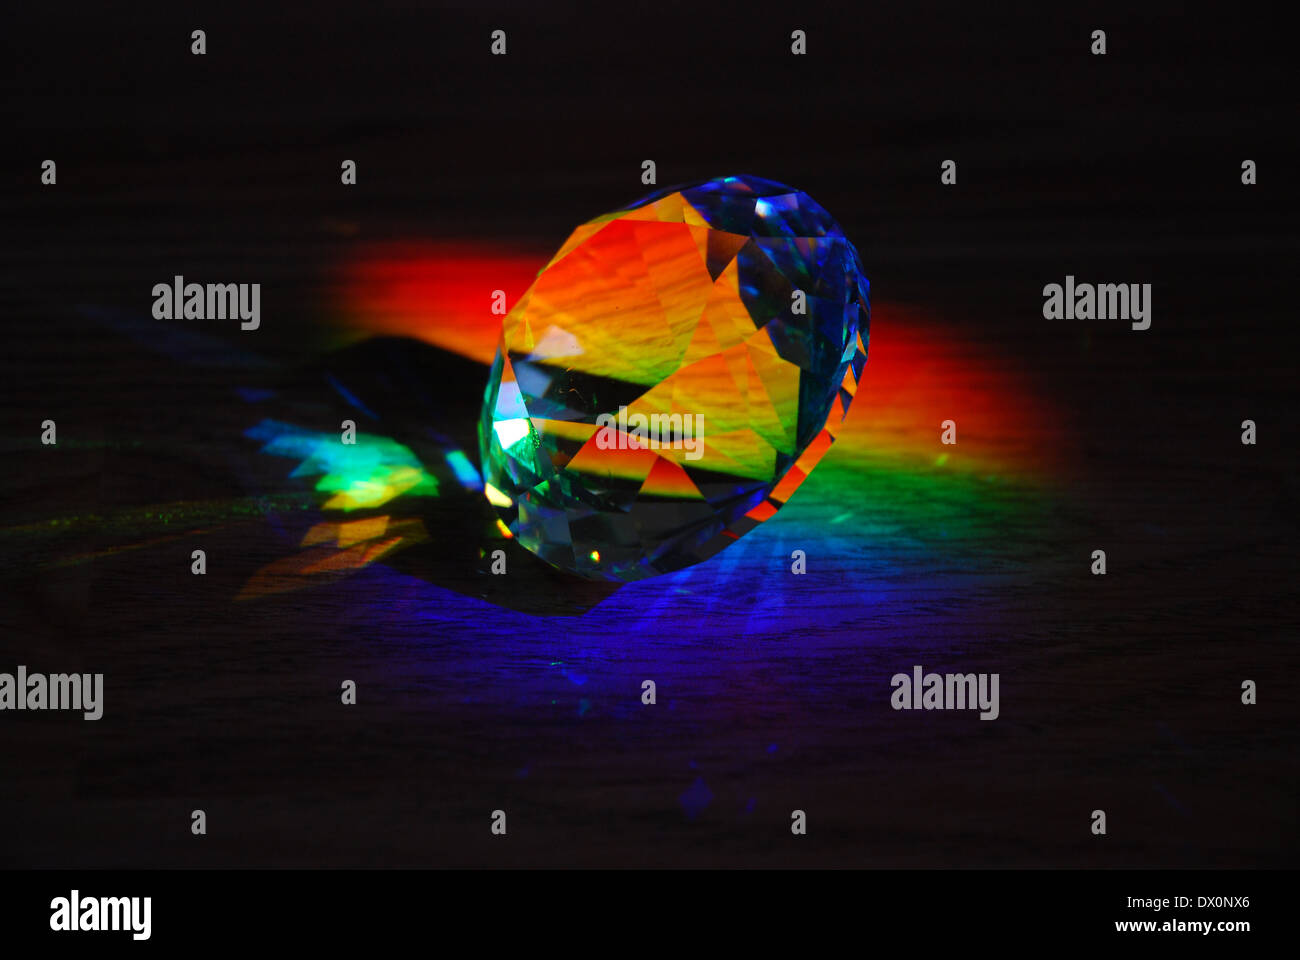 Prism casting rainbows against dark background Stock Photo